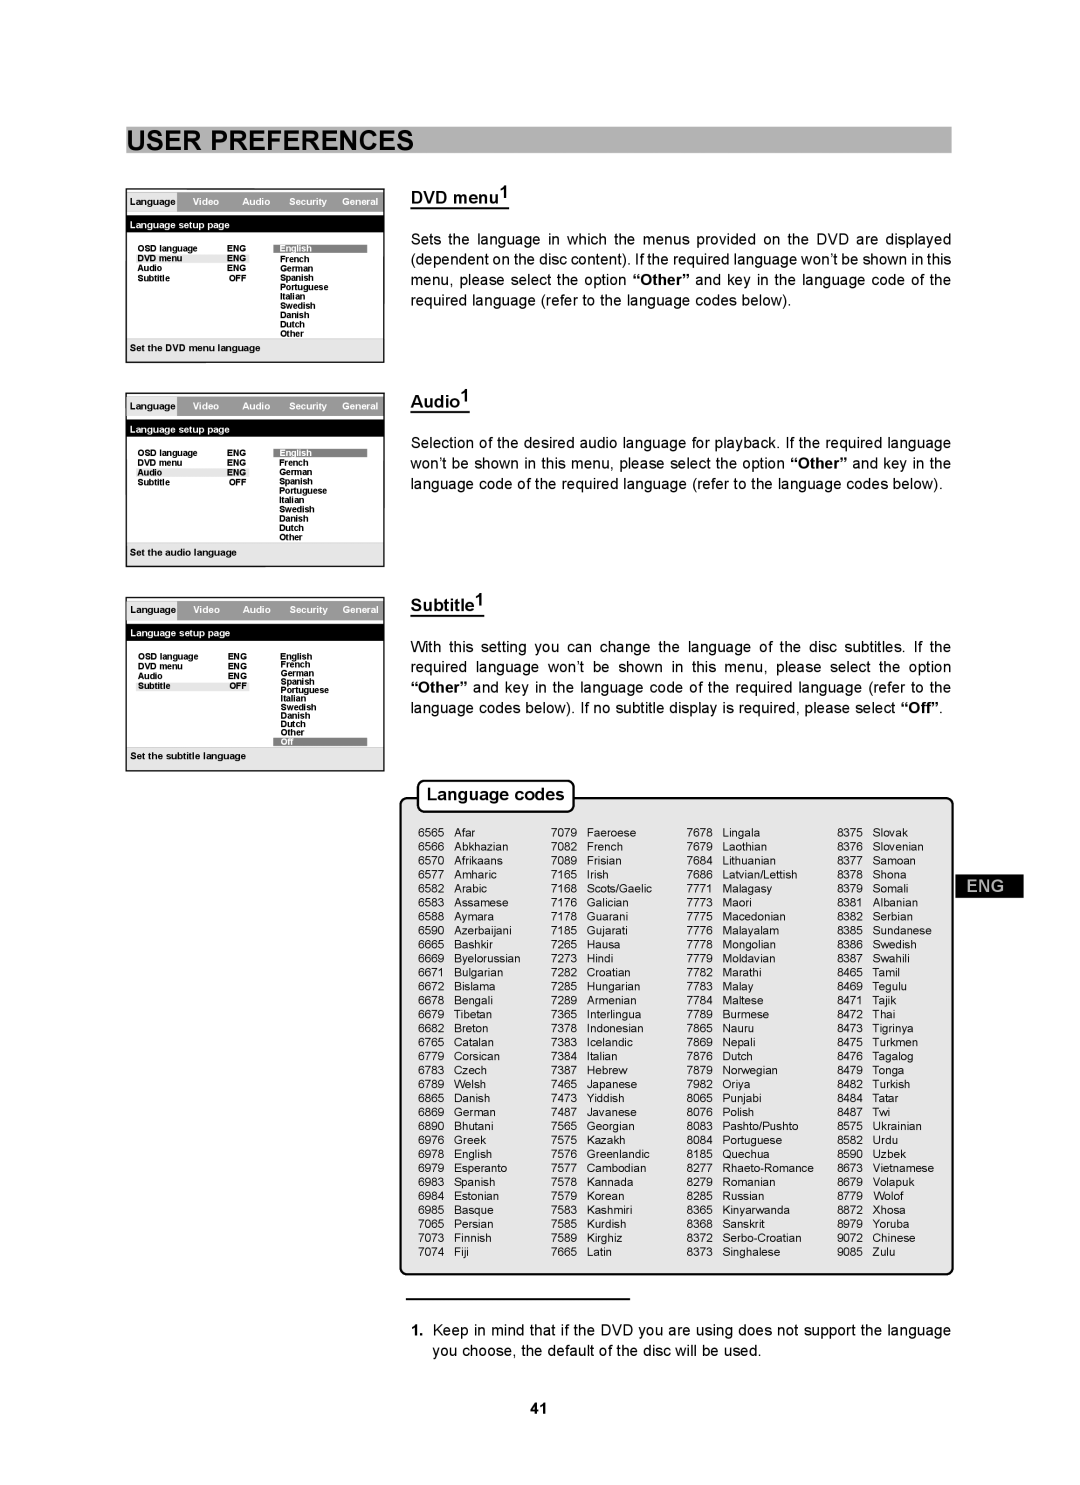 CyberHome Entertainment CH-DVD 452 manual DVD menu1, Audio1, Subtitle1, Language codes, User Preferences 